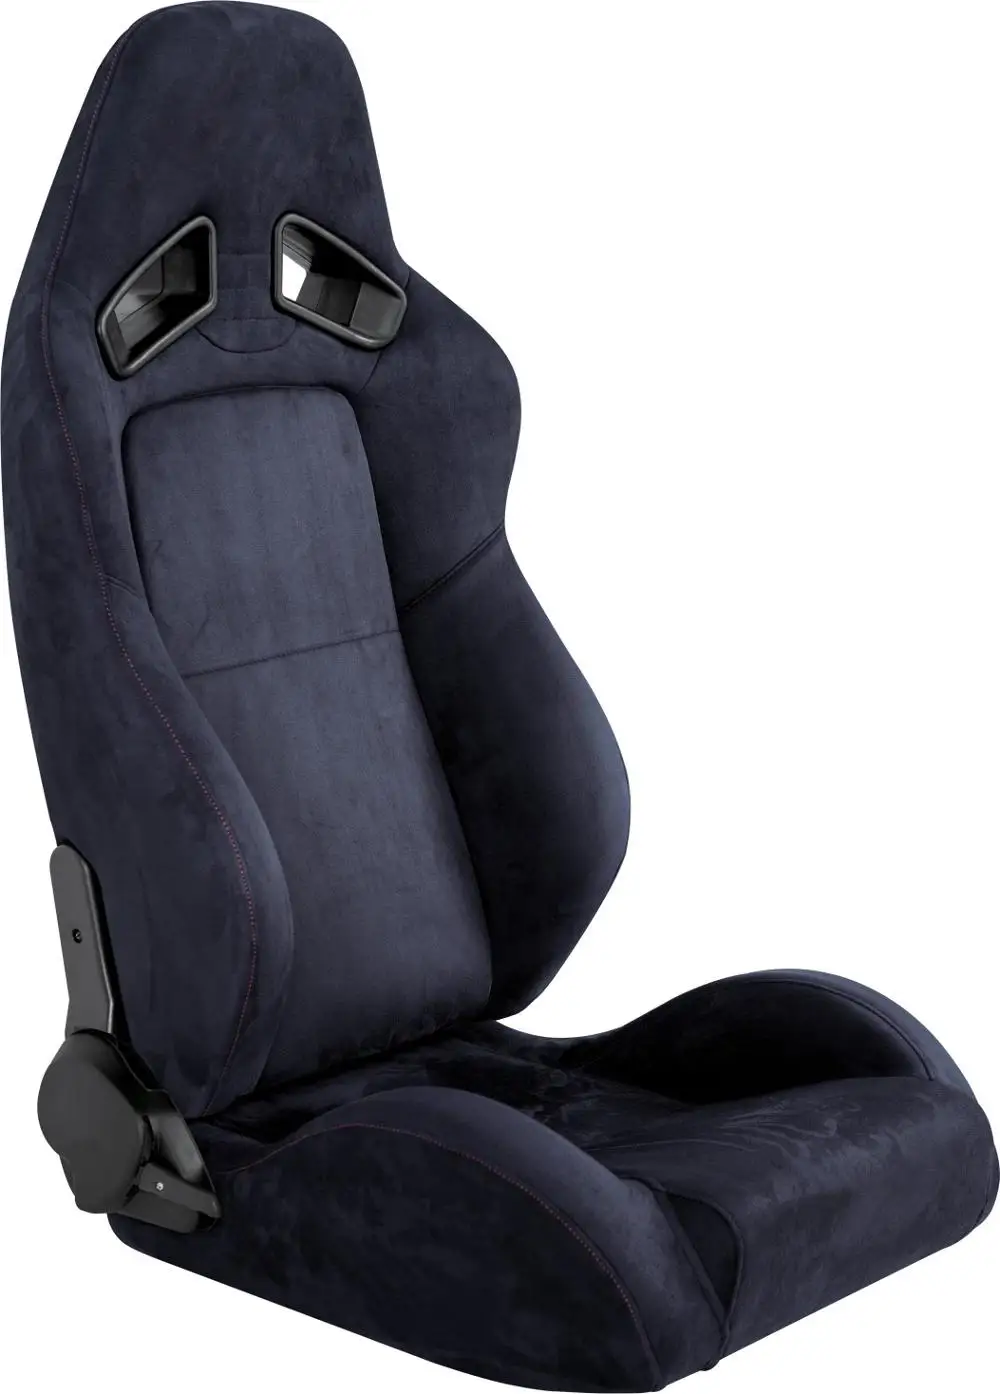 Sport Seat Car Accessories Pvc Fabric Racing Seat-jbr1052 - Buy Sport